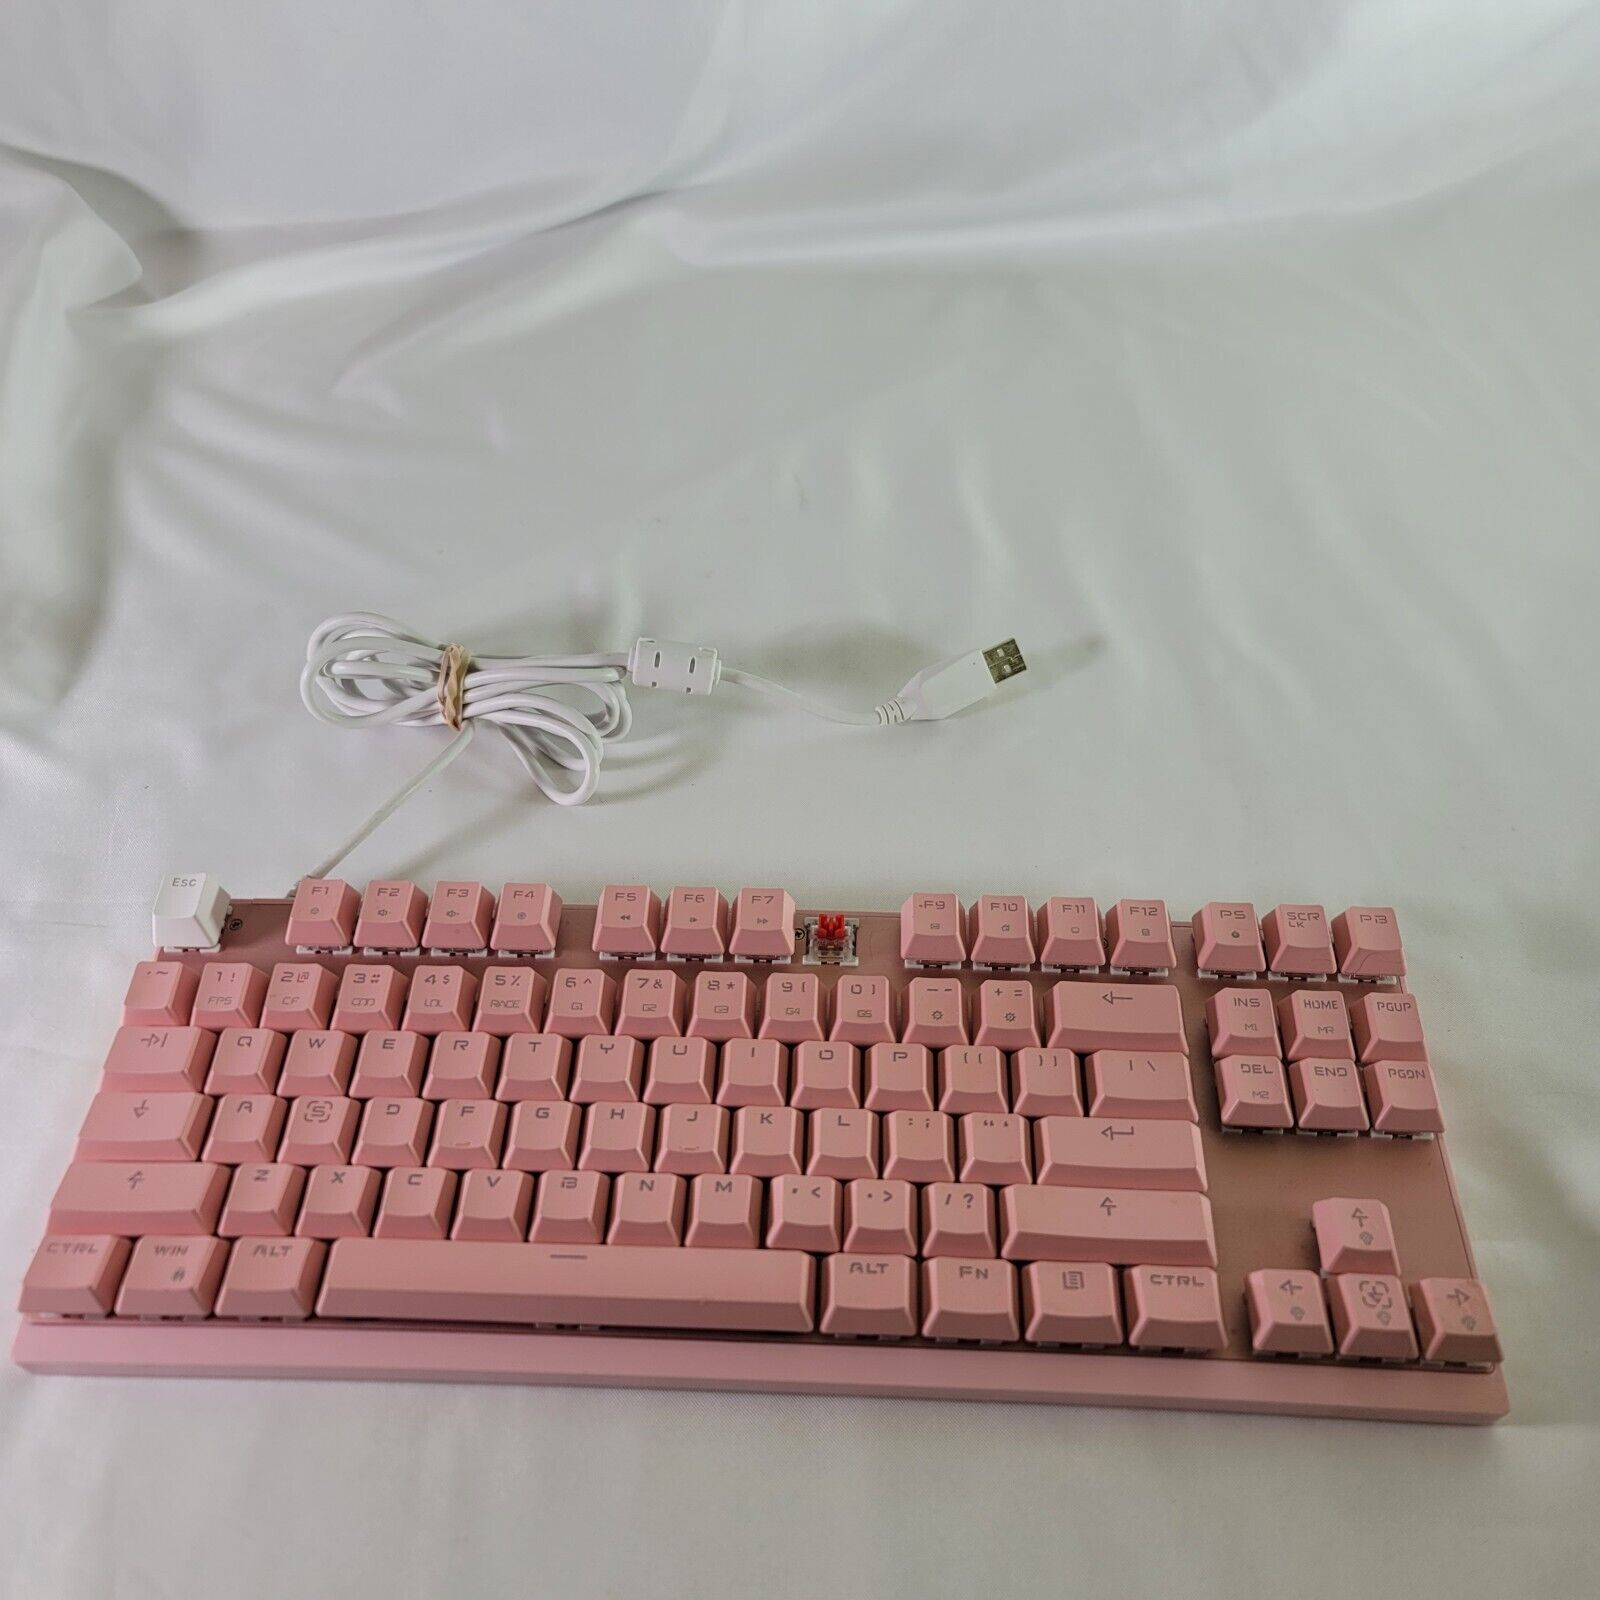 Motospeed K82 Professional Gaming Keyboard RGB Color Backlight, Pink- No F8 Key